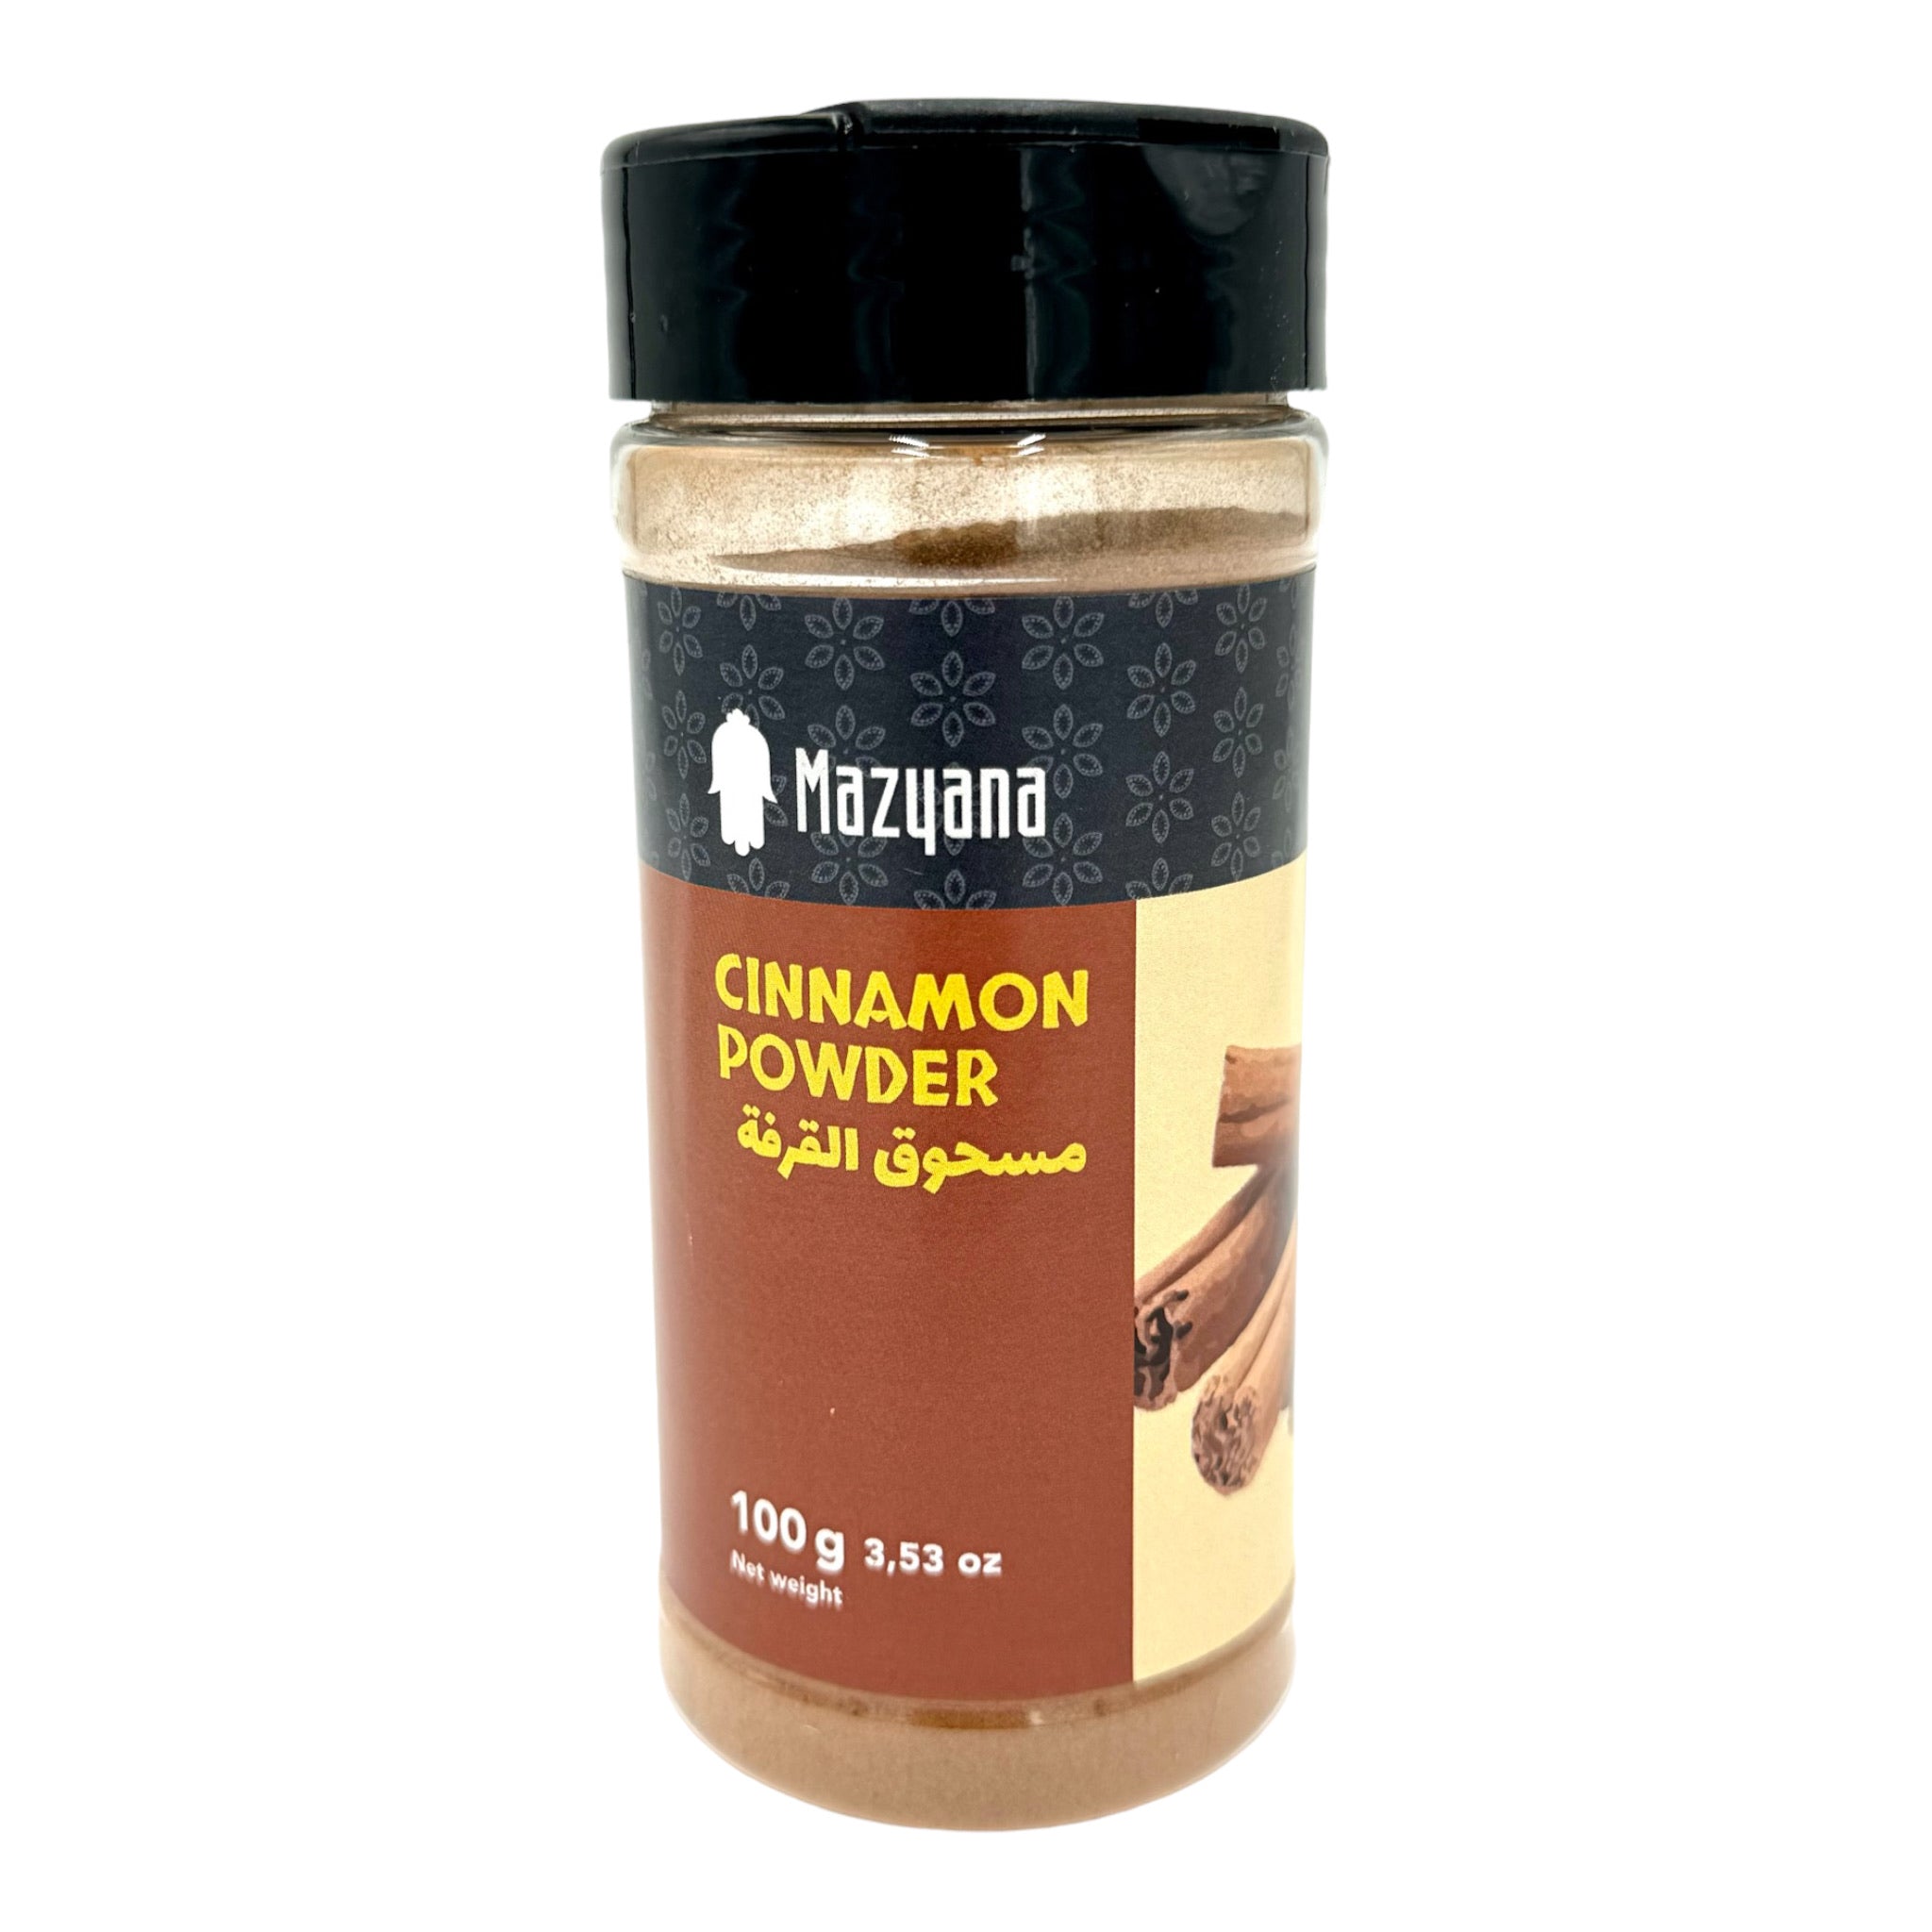 Cinnamon Power Mazyana Brand